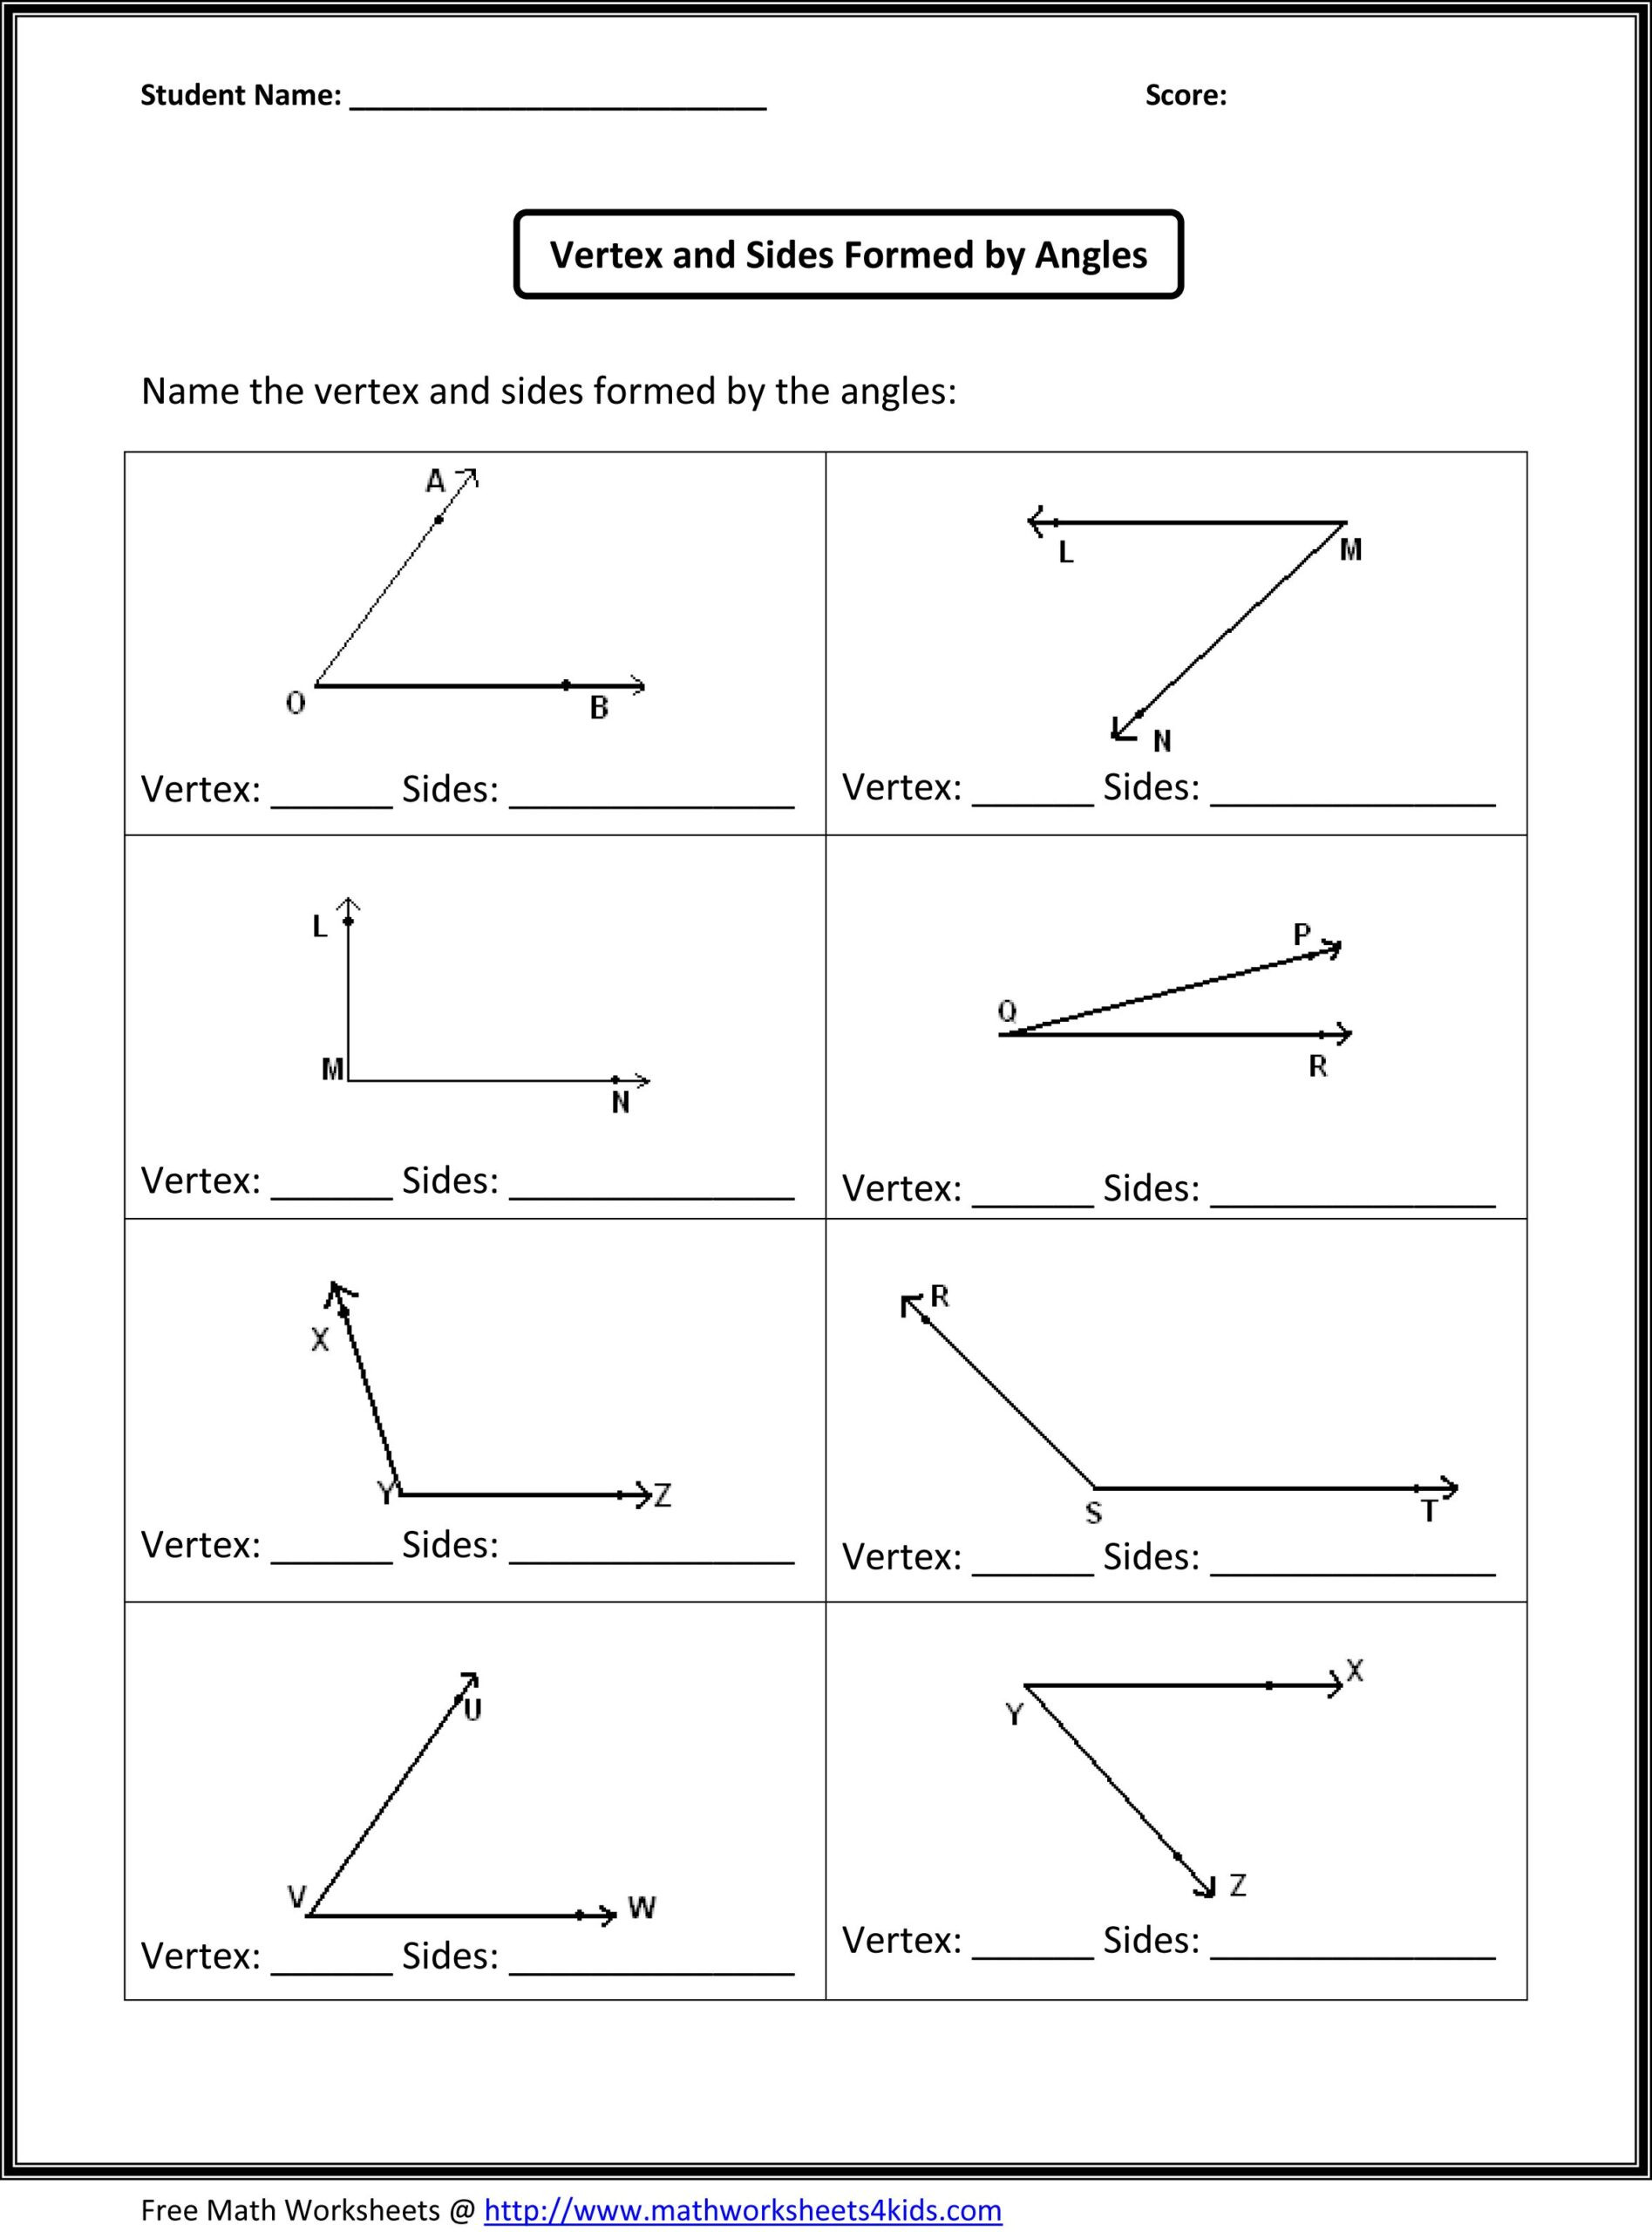 Z Score Practice Worksheet 6 Times Table Practice Worksheet Vertical Addition